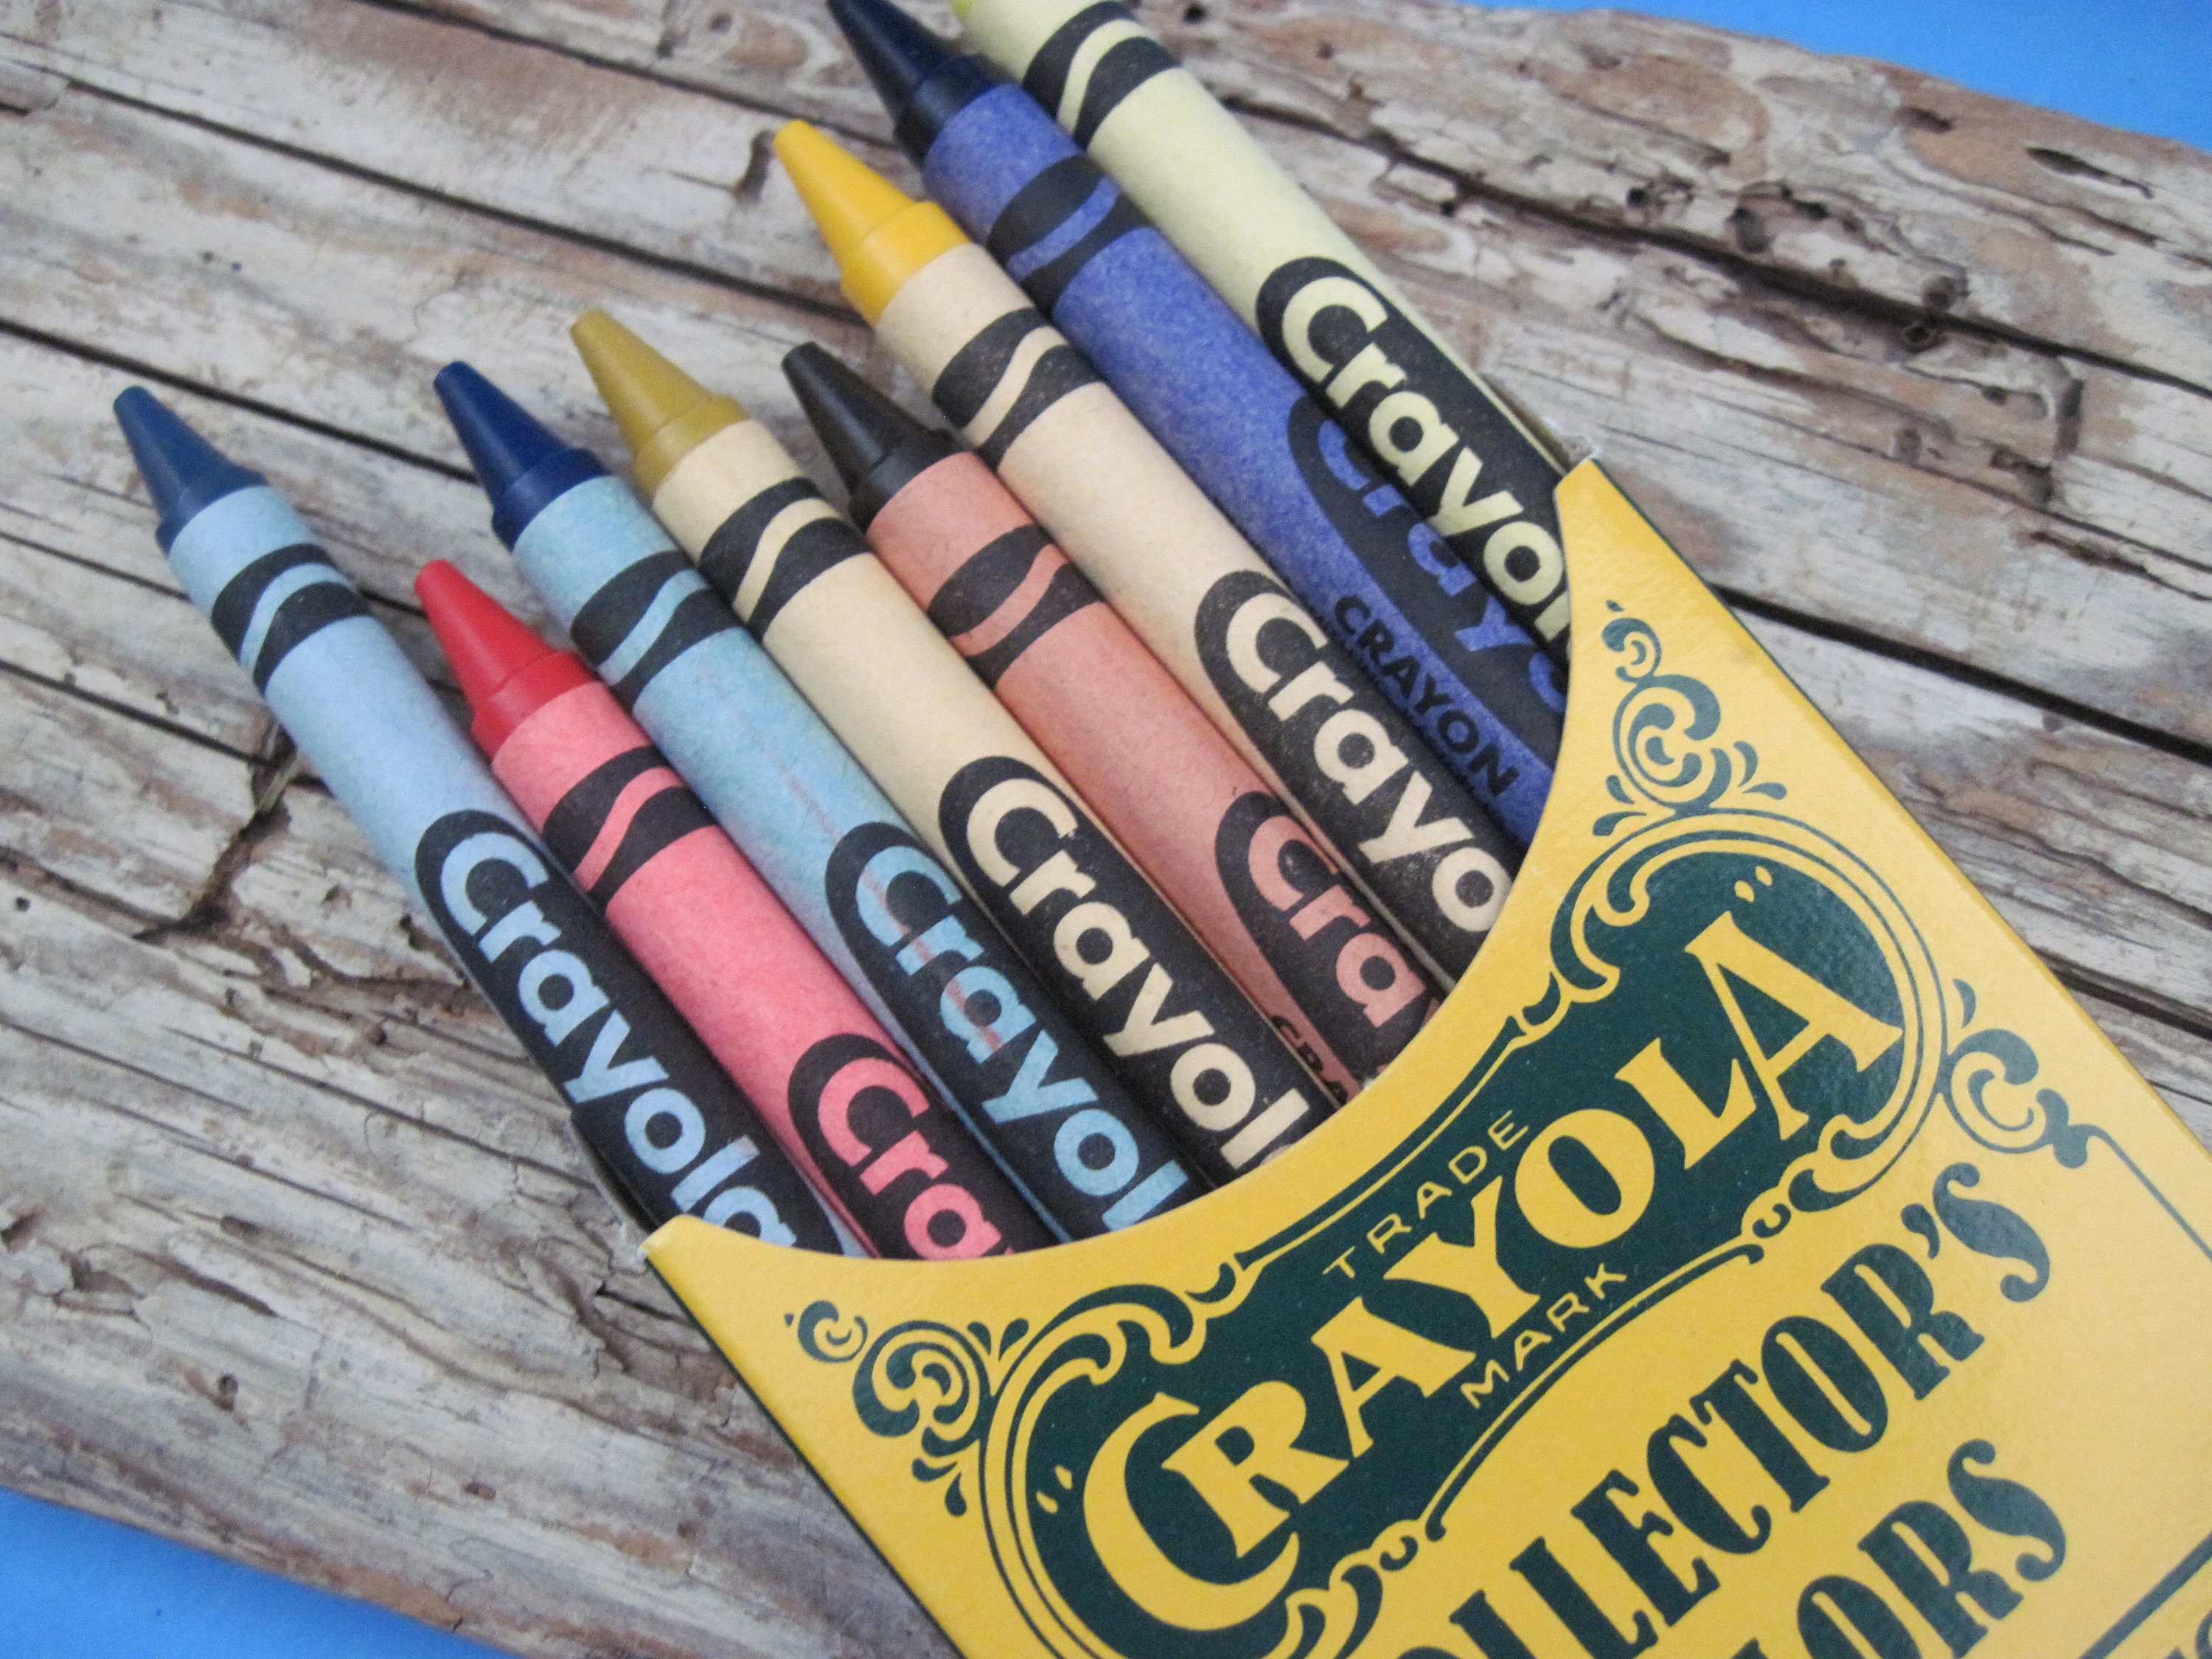 Gray Crayons 45 Crayons Crayola Crayons Bulk Crayons Refill Classroom  Coloring Crayon 